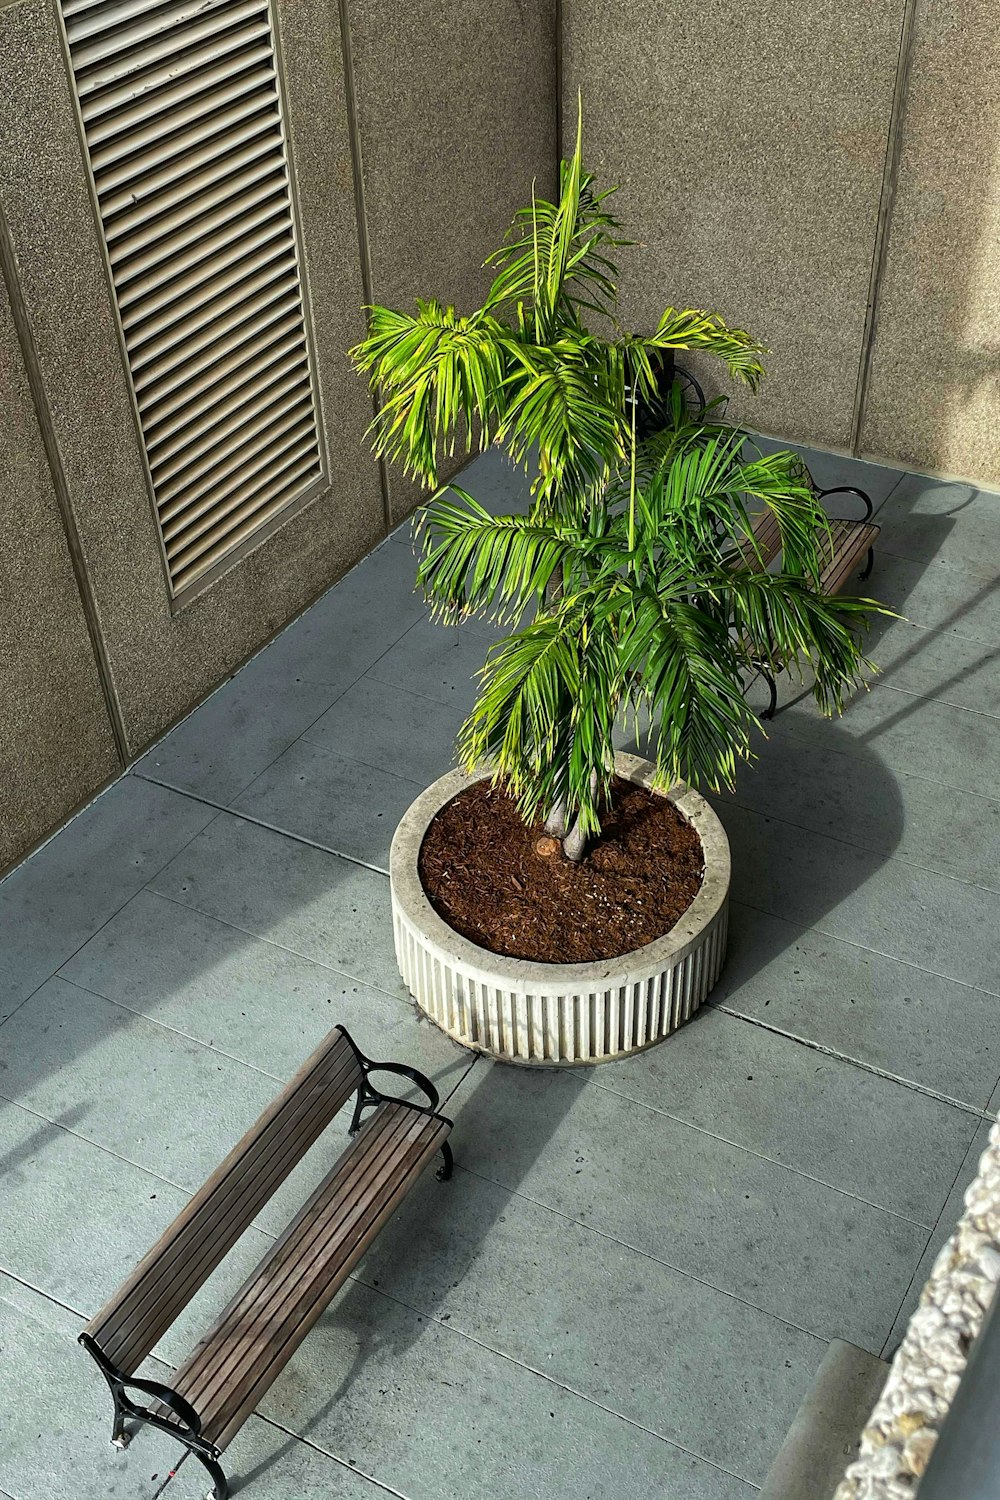 a bench sitting next to a plant on a sidewalk